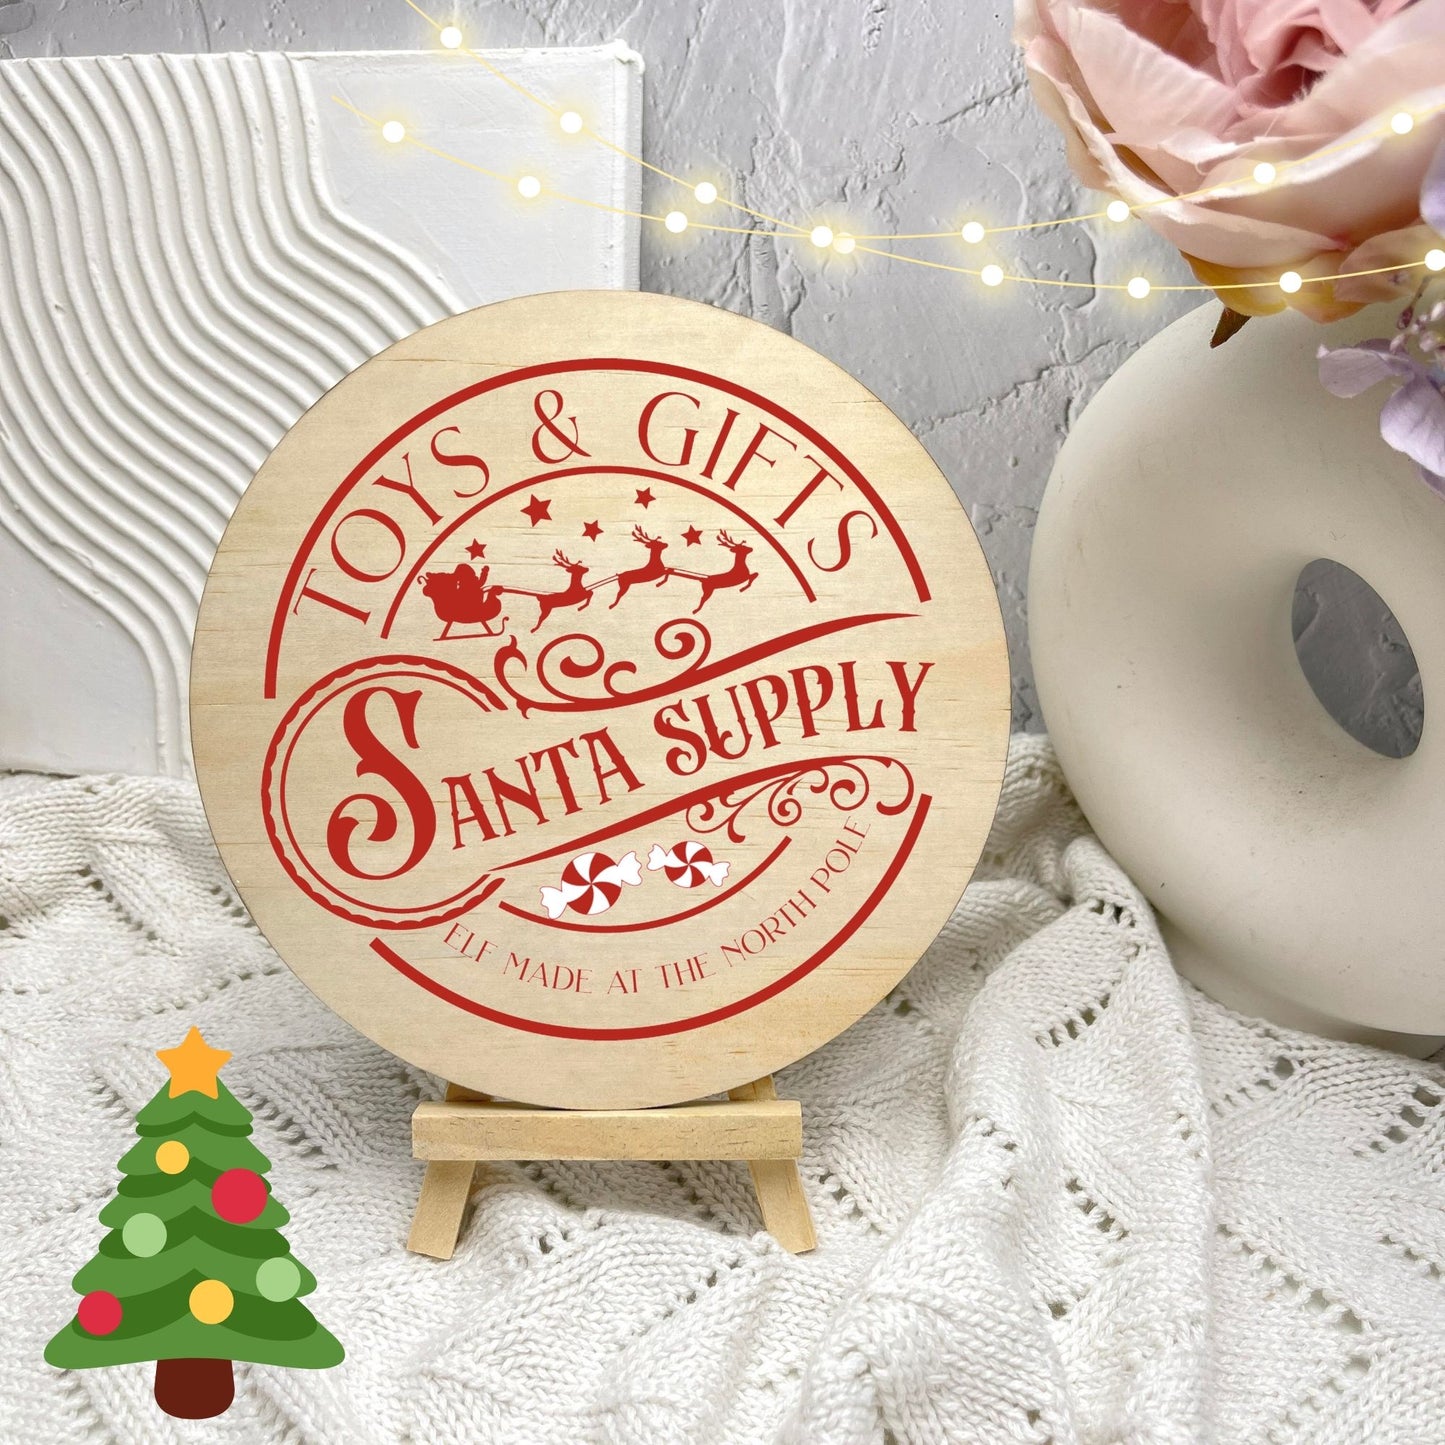 Santa Supply Toys and Gifts Sign, Seasonal Decor, Holidays decor, Christmas Decor, festive decorations c16